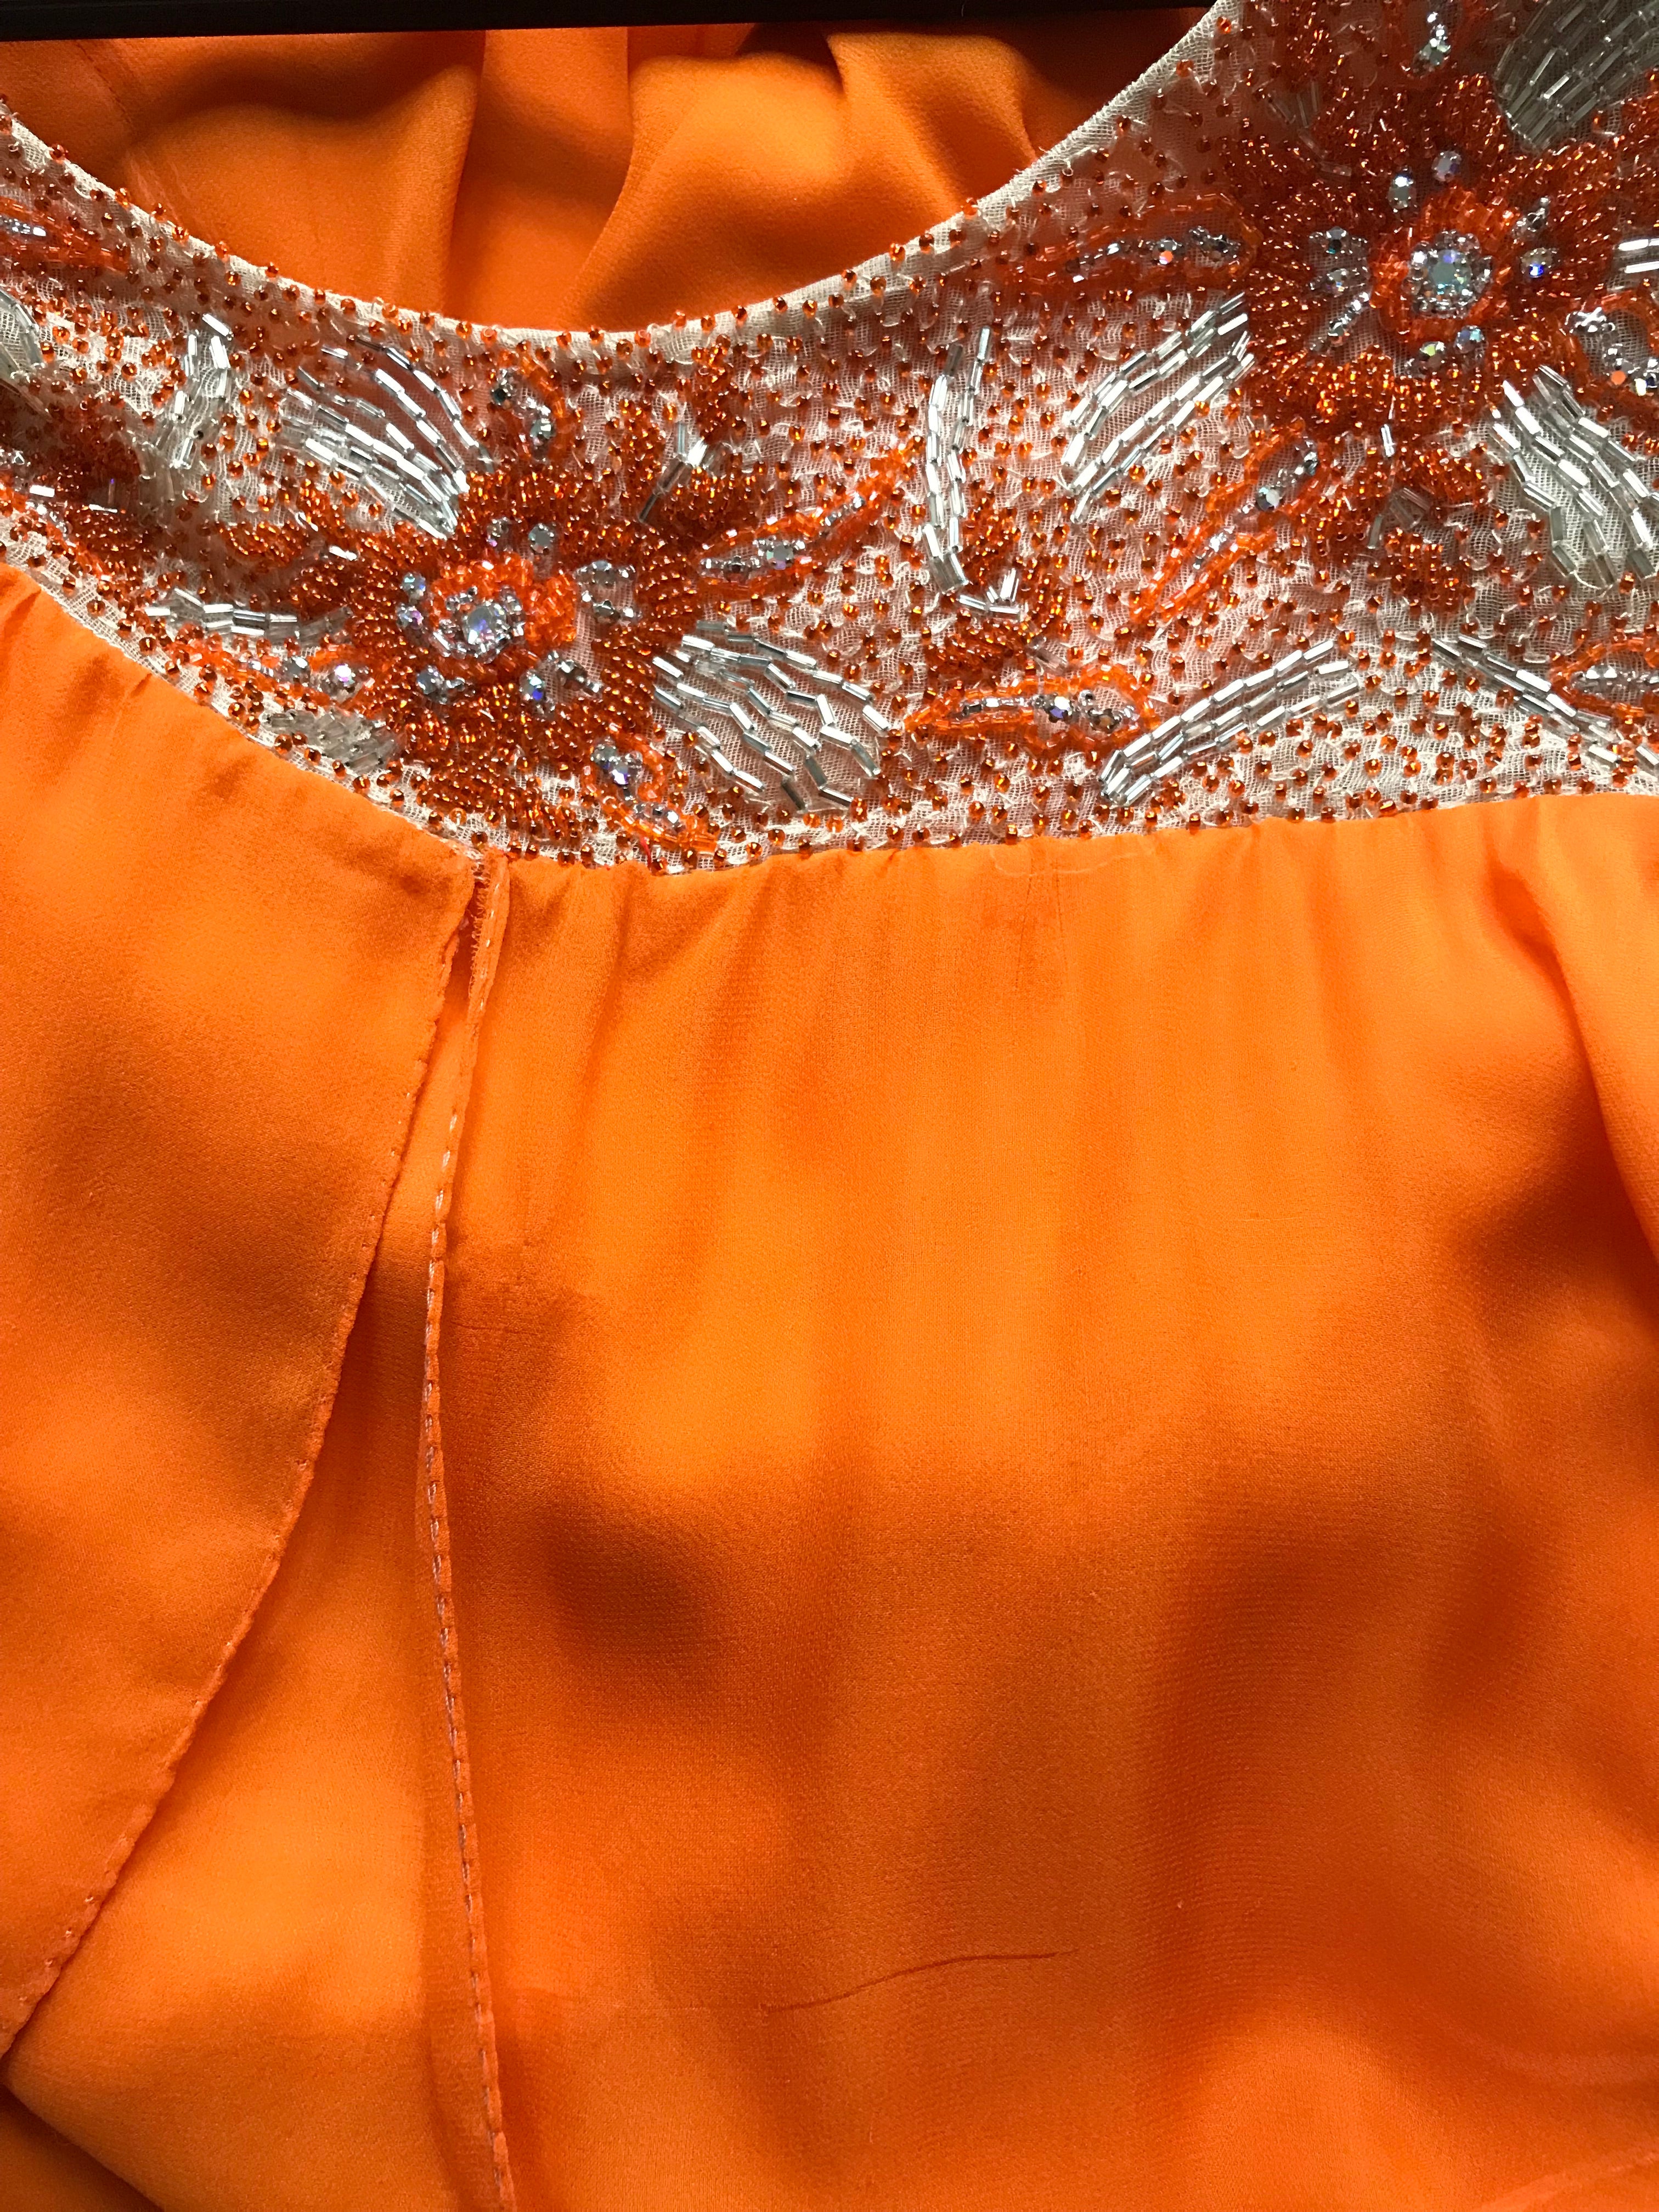 1960s Beaded Orange Silk Chiffon Gown